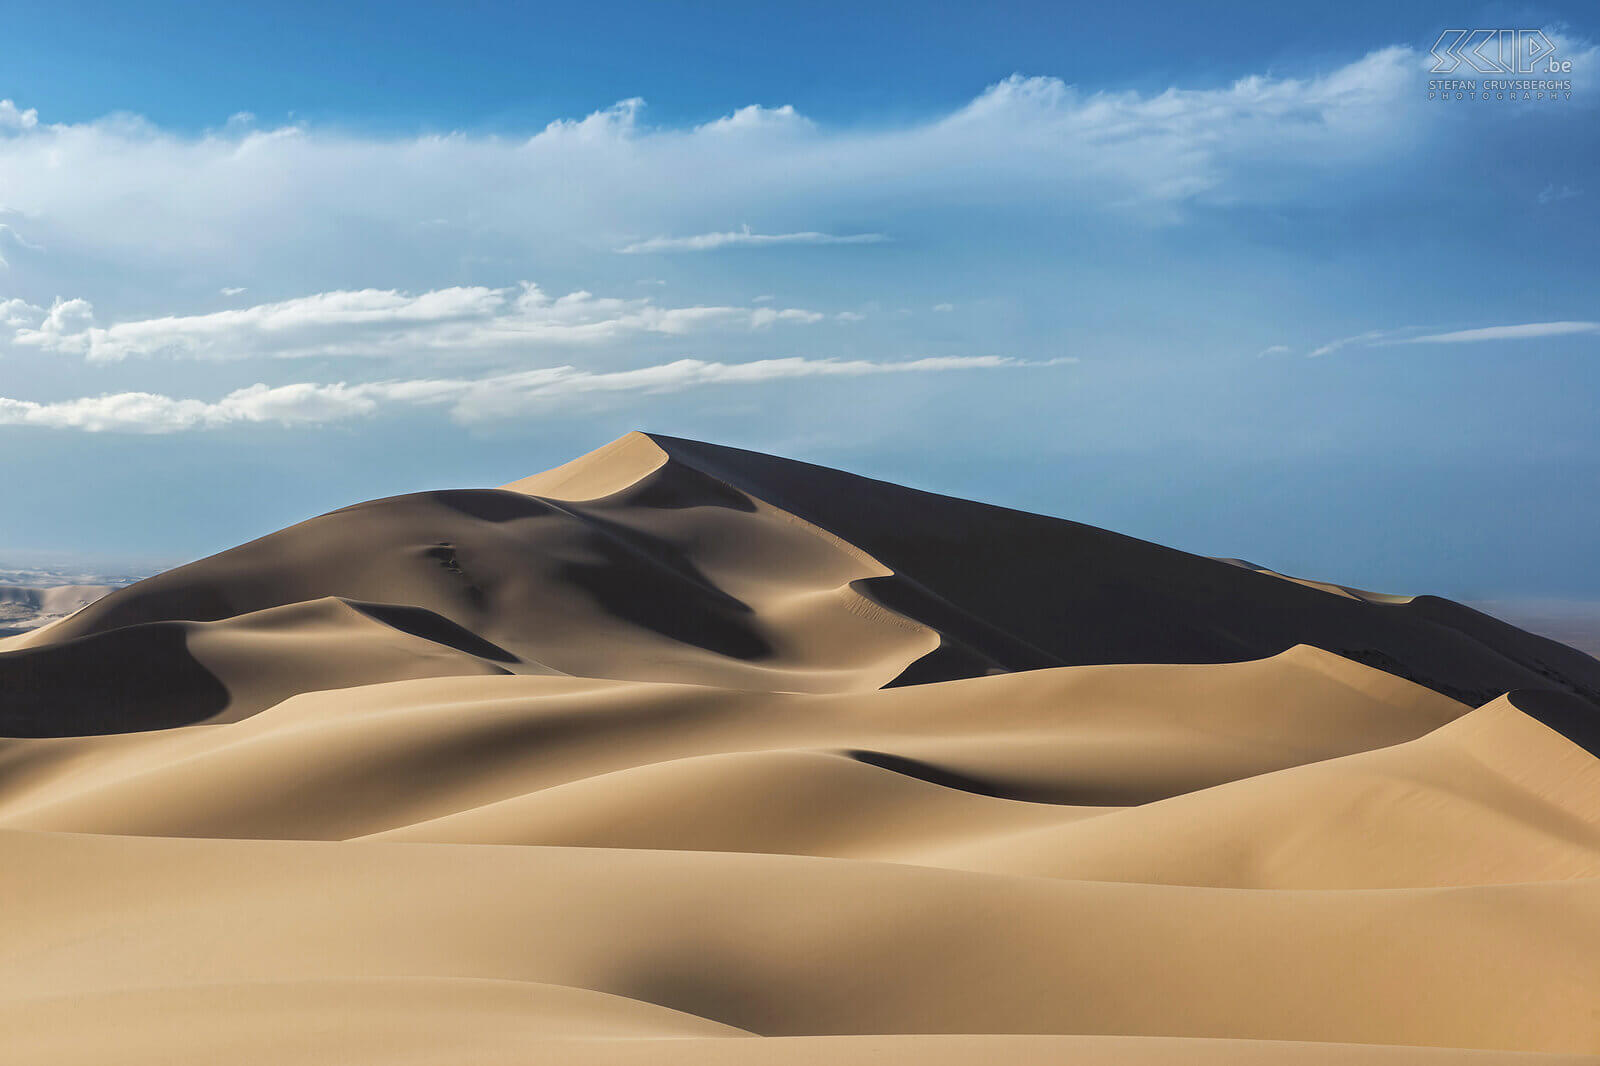 Gobi - Khongoryn Els Khongoryn Els also known as the ‘Singing dunes’ are the best known and highest sand dunes of the Gobi Gurvan Saikhan national park. Stefan Cruysberghs